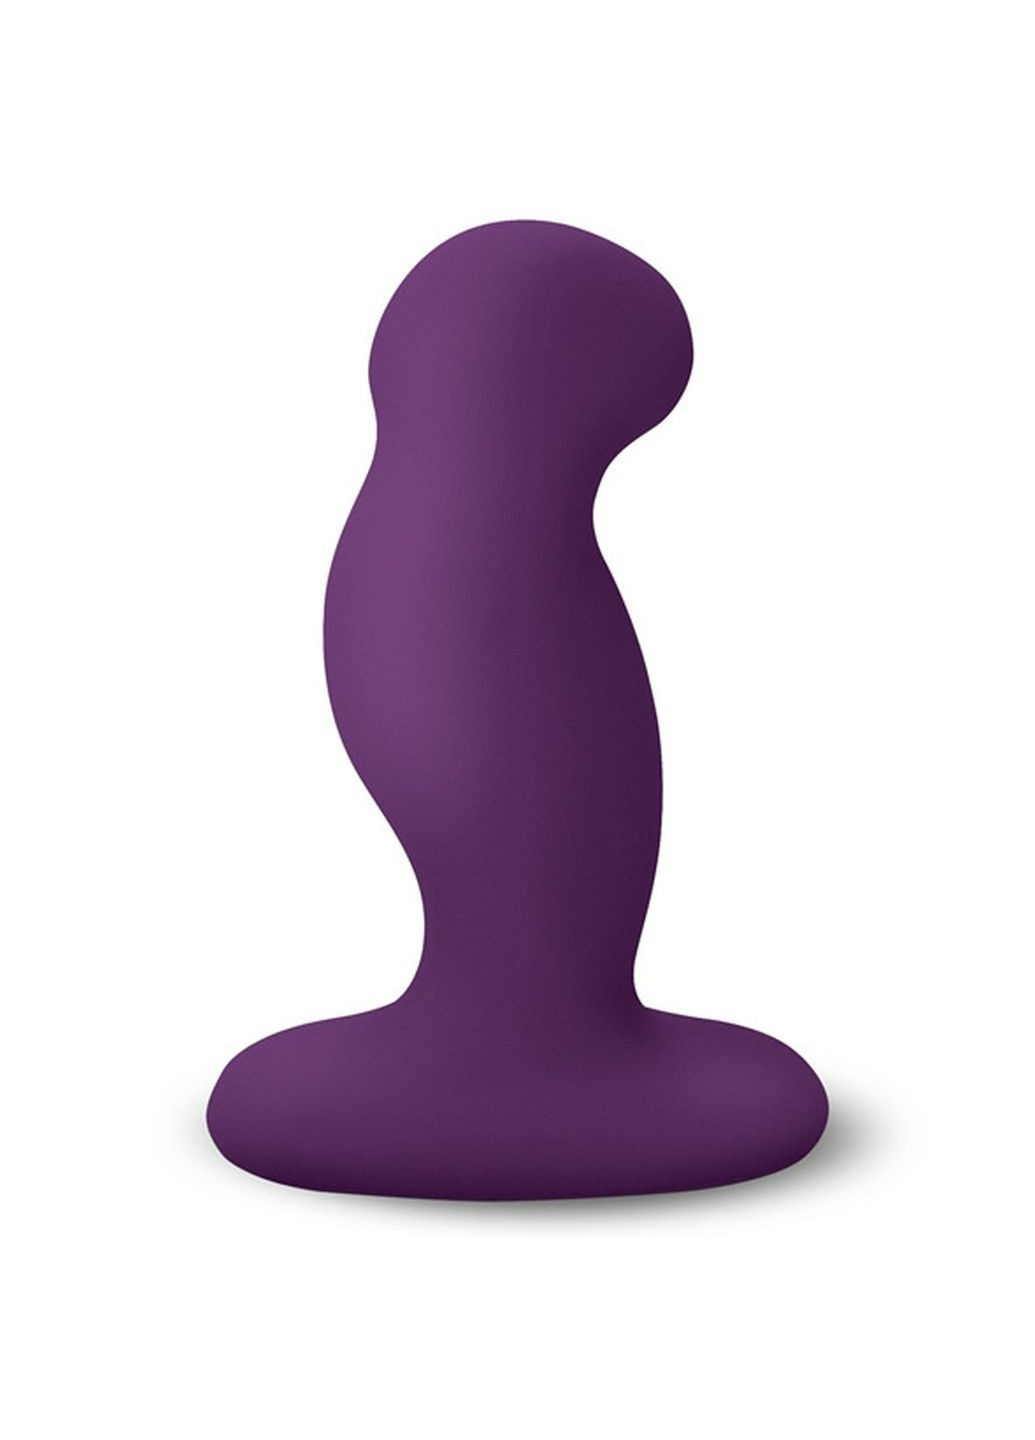 Массажер простаты с вибрацией G-Play Plus s Purple, макс диаметр 2.3 см Nexus (289784732)